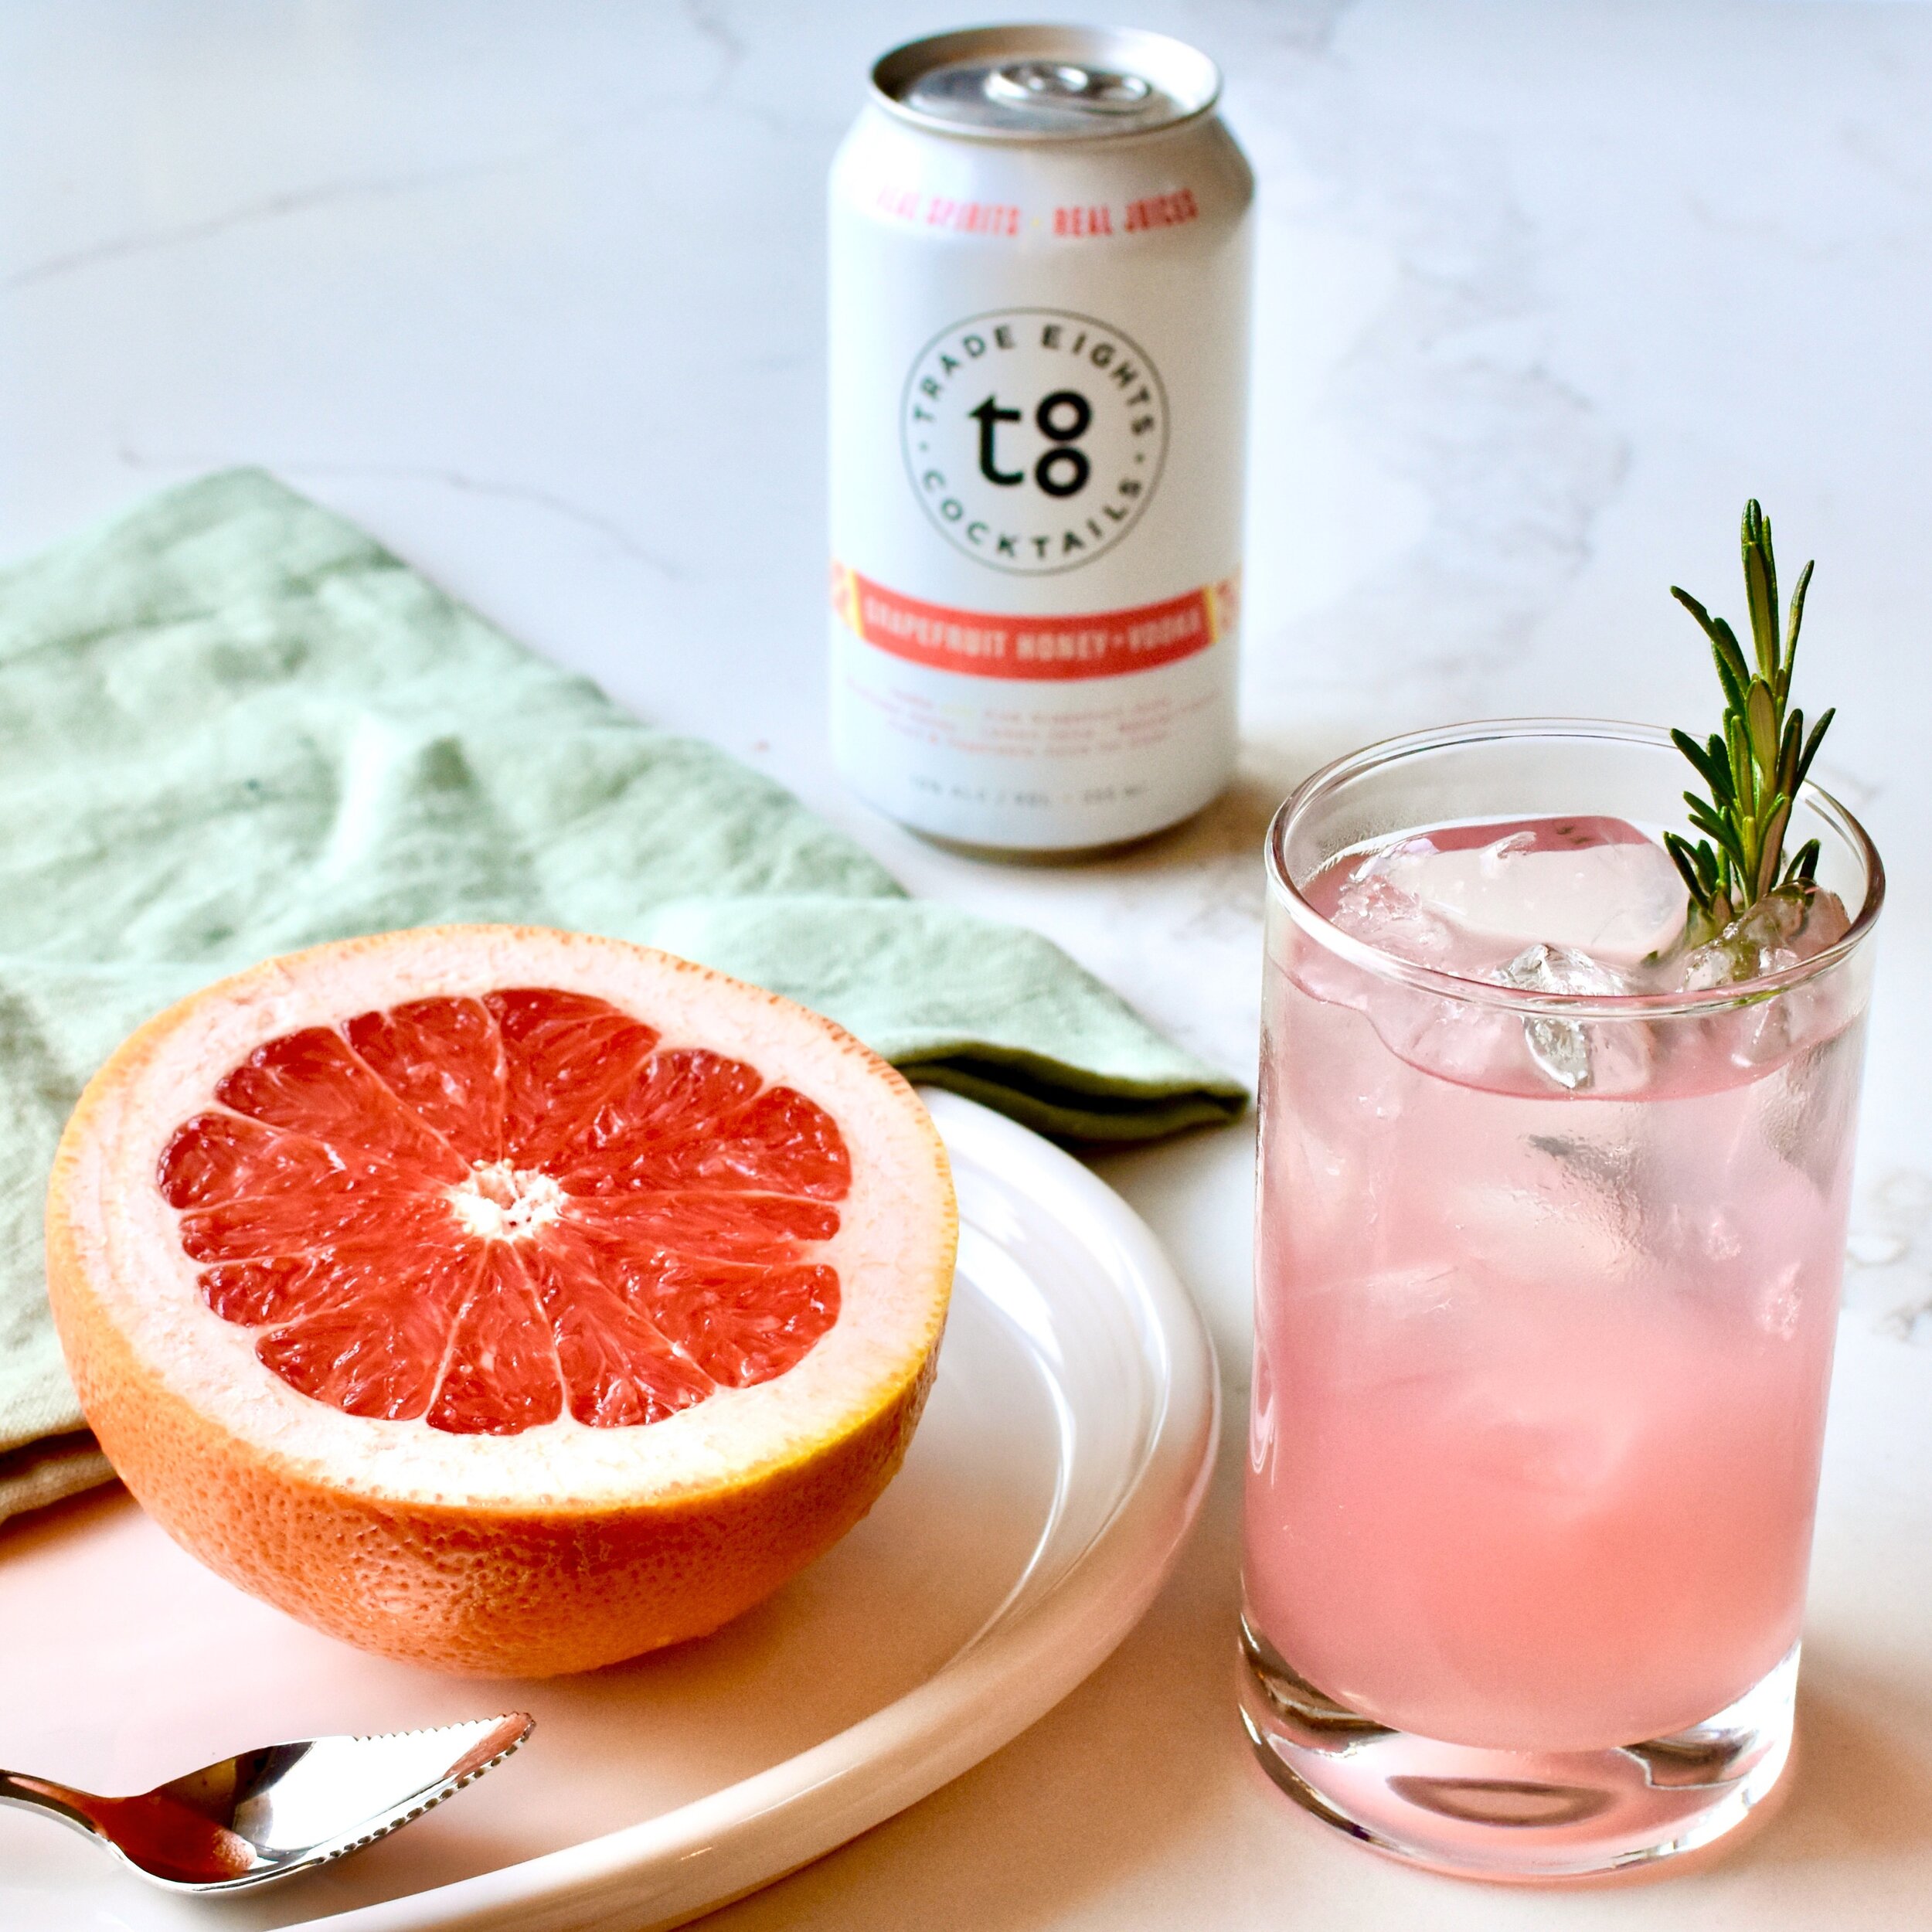 Grapefruit two ways. Yum and yummier (if you ask us) ✨

#grapefruithoneyvodka